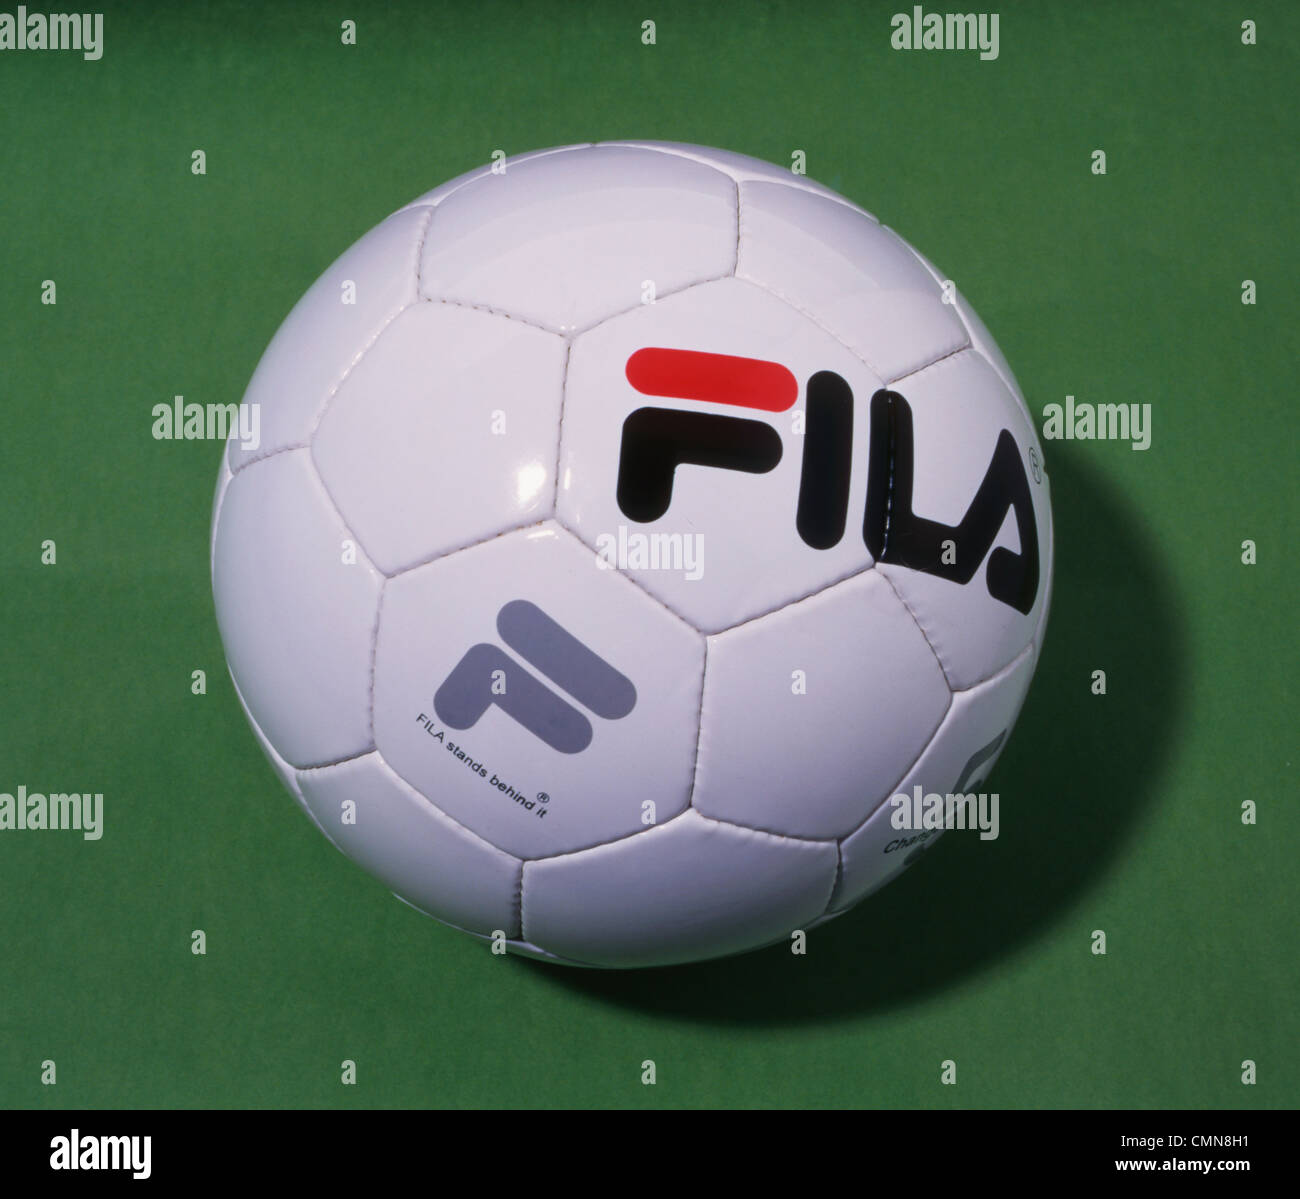 Football Fila couture Photo Stock - Alamy